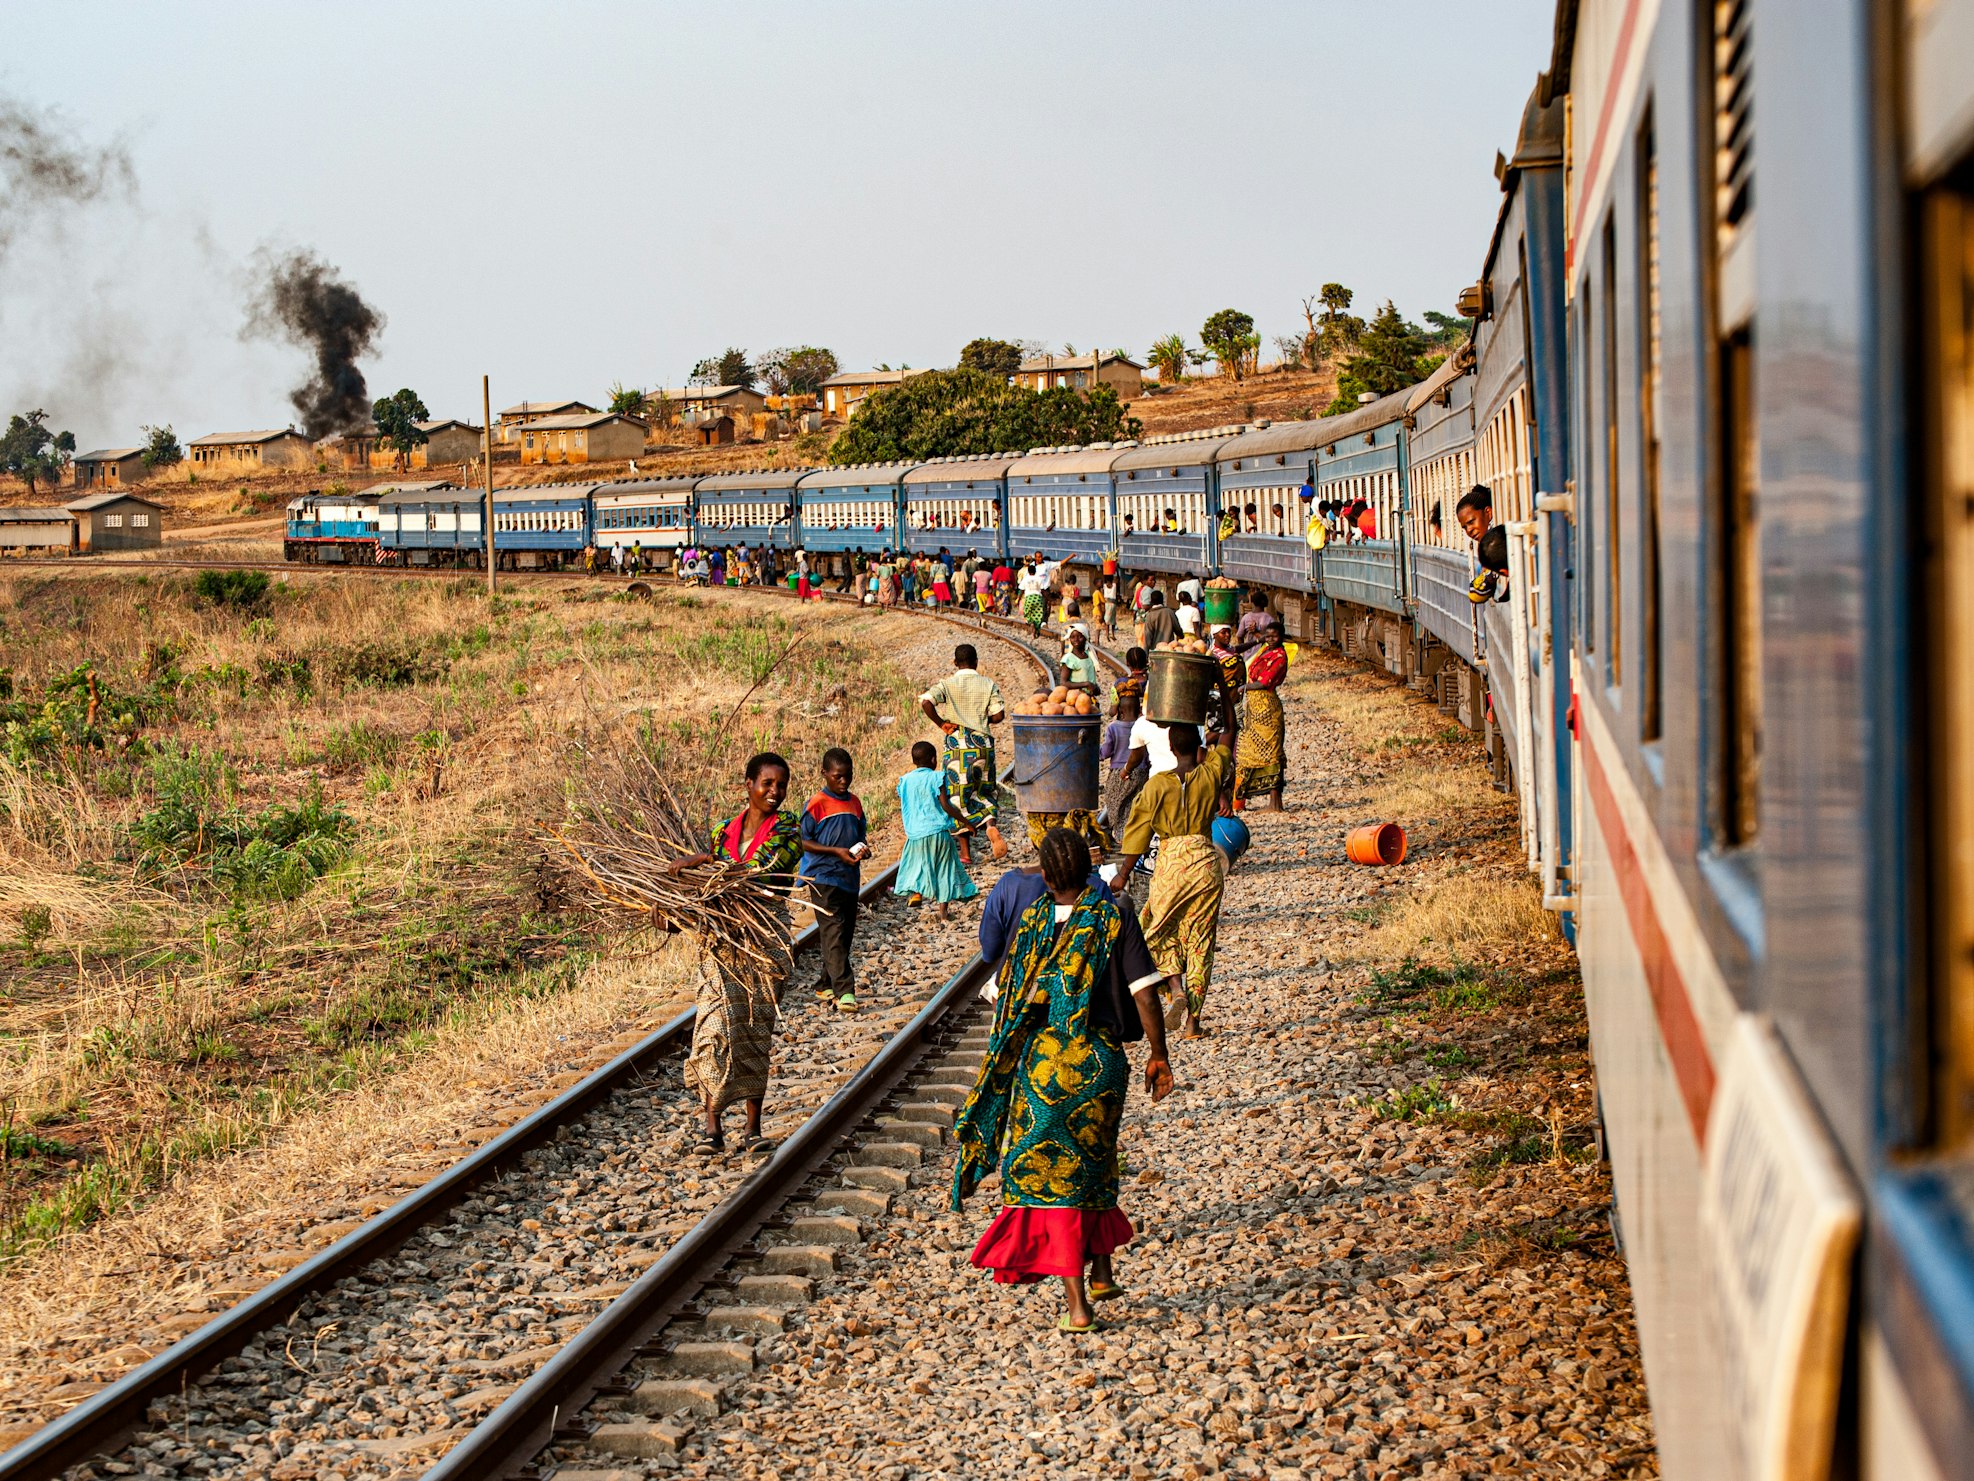 Dar es Salaam TAZARA Railway that connects Tanzania and Zambia (image source: photo by katsuma tanaka on unsplash)